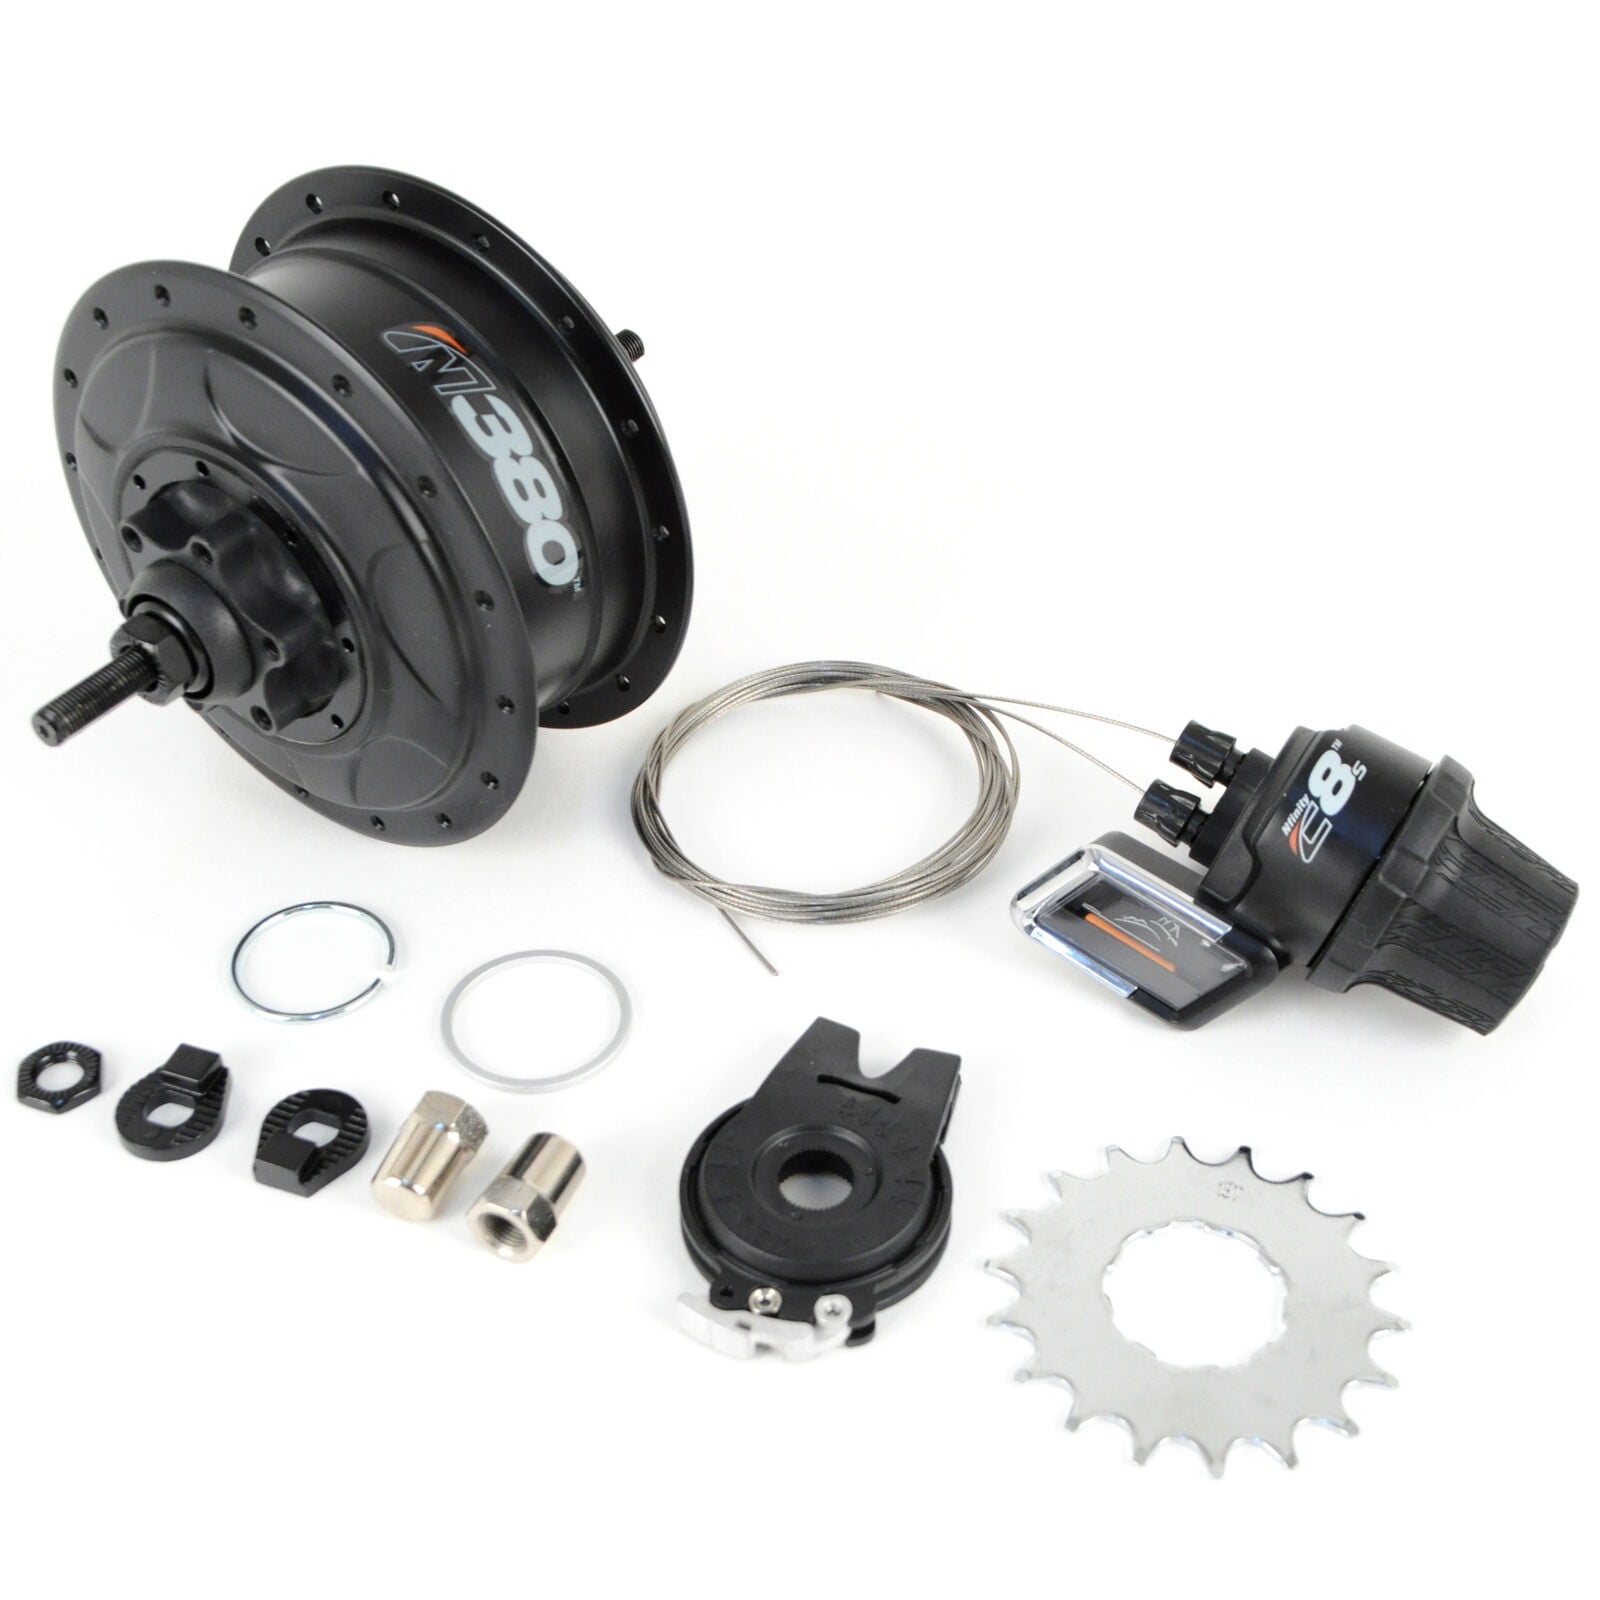 Details about   NuVinci N380SE CVP Internal Gear Bicycle Rear Hub Black 32h Rim Brake // New C8 